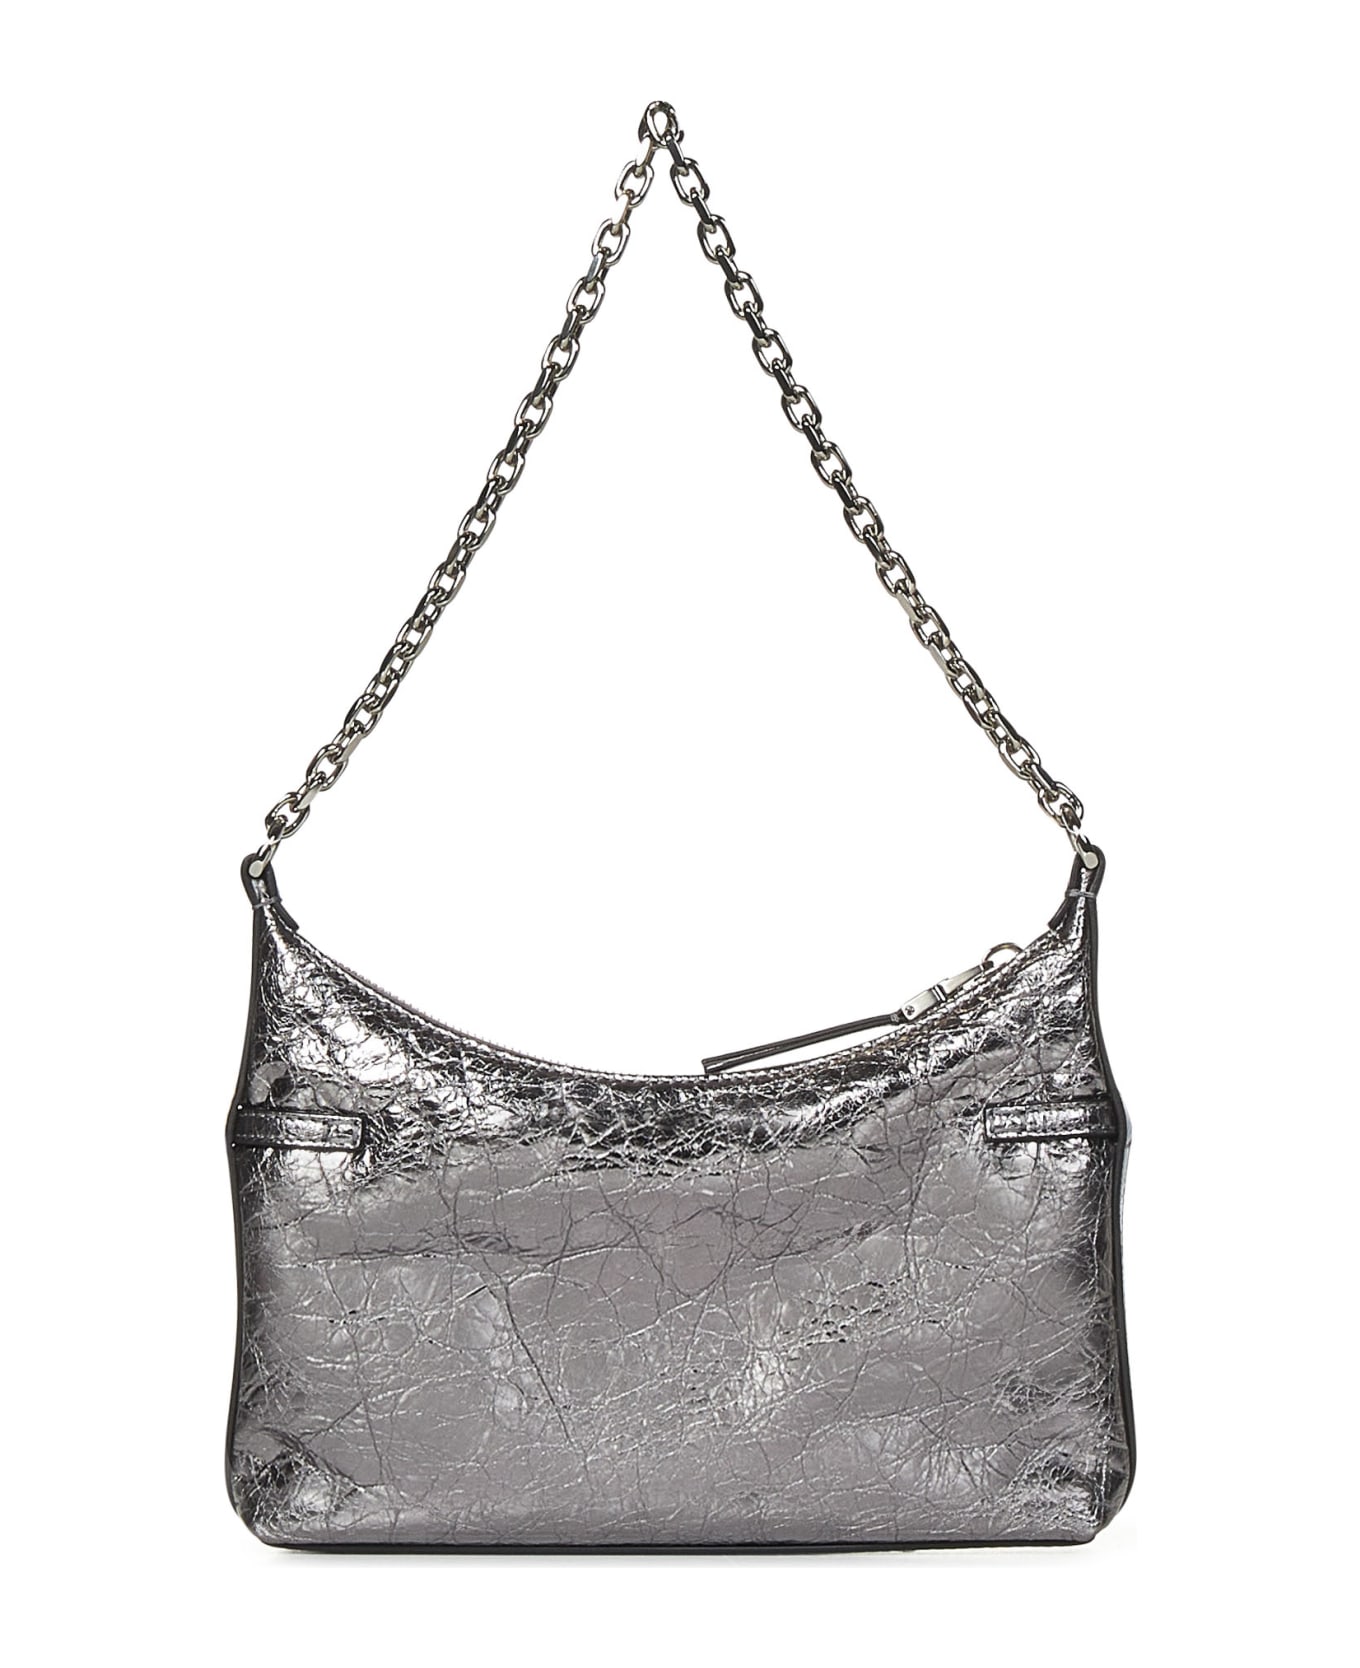 Givenchy Voyou Party Shoulder Bag - Grey